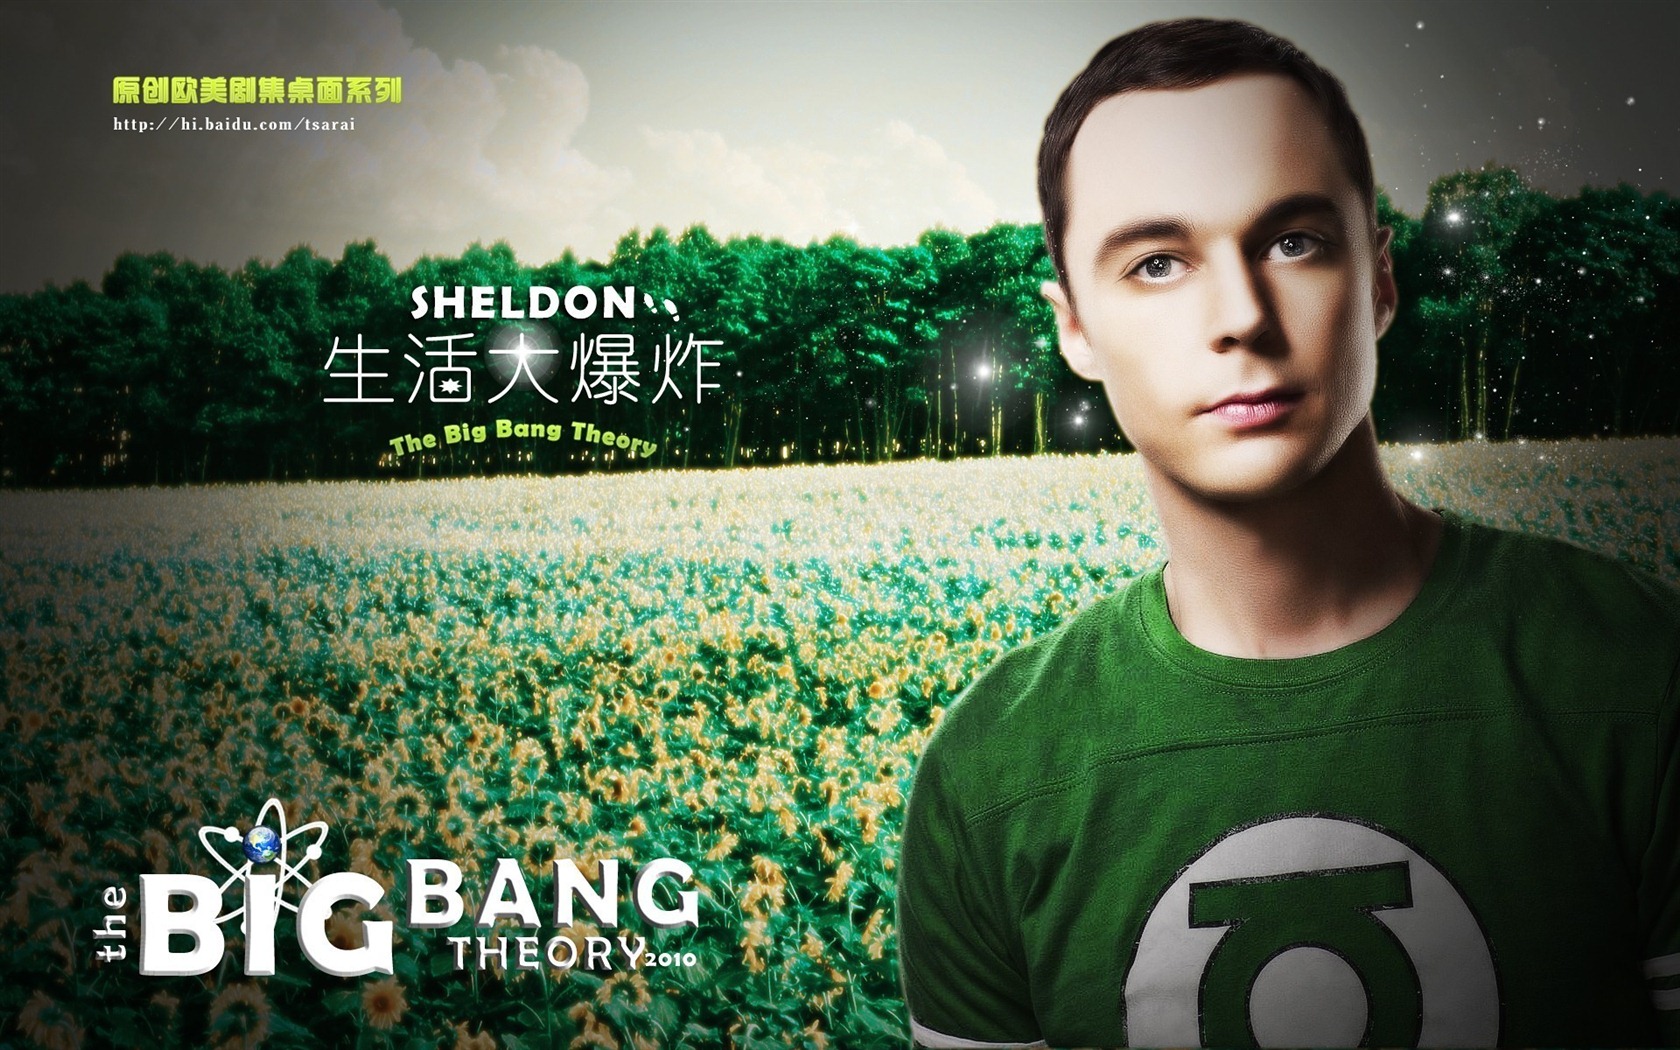 The Big Bang Theory ビッグバン理論TVシリーズHDの壁紙 #16 - 1680x1050